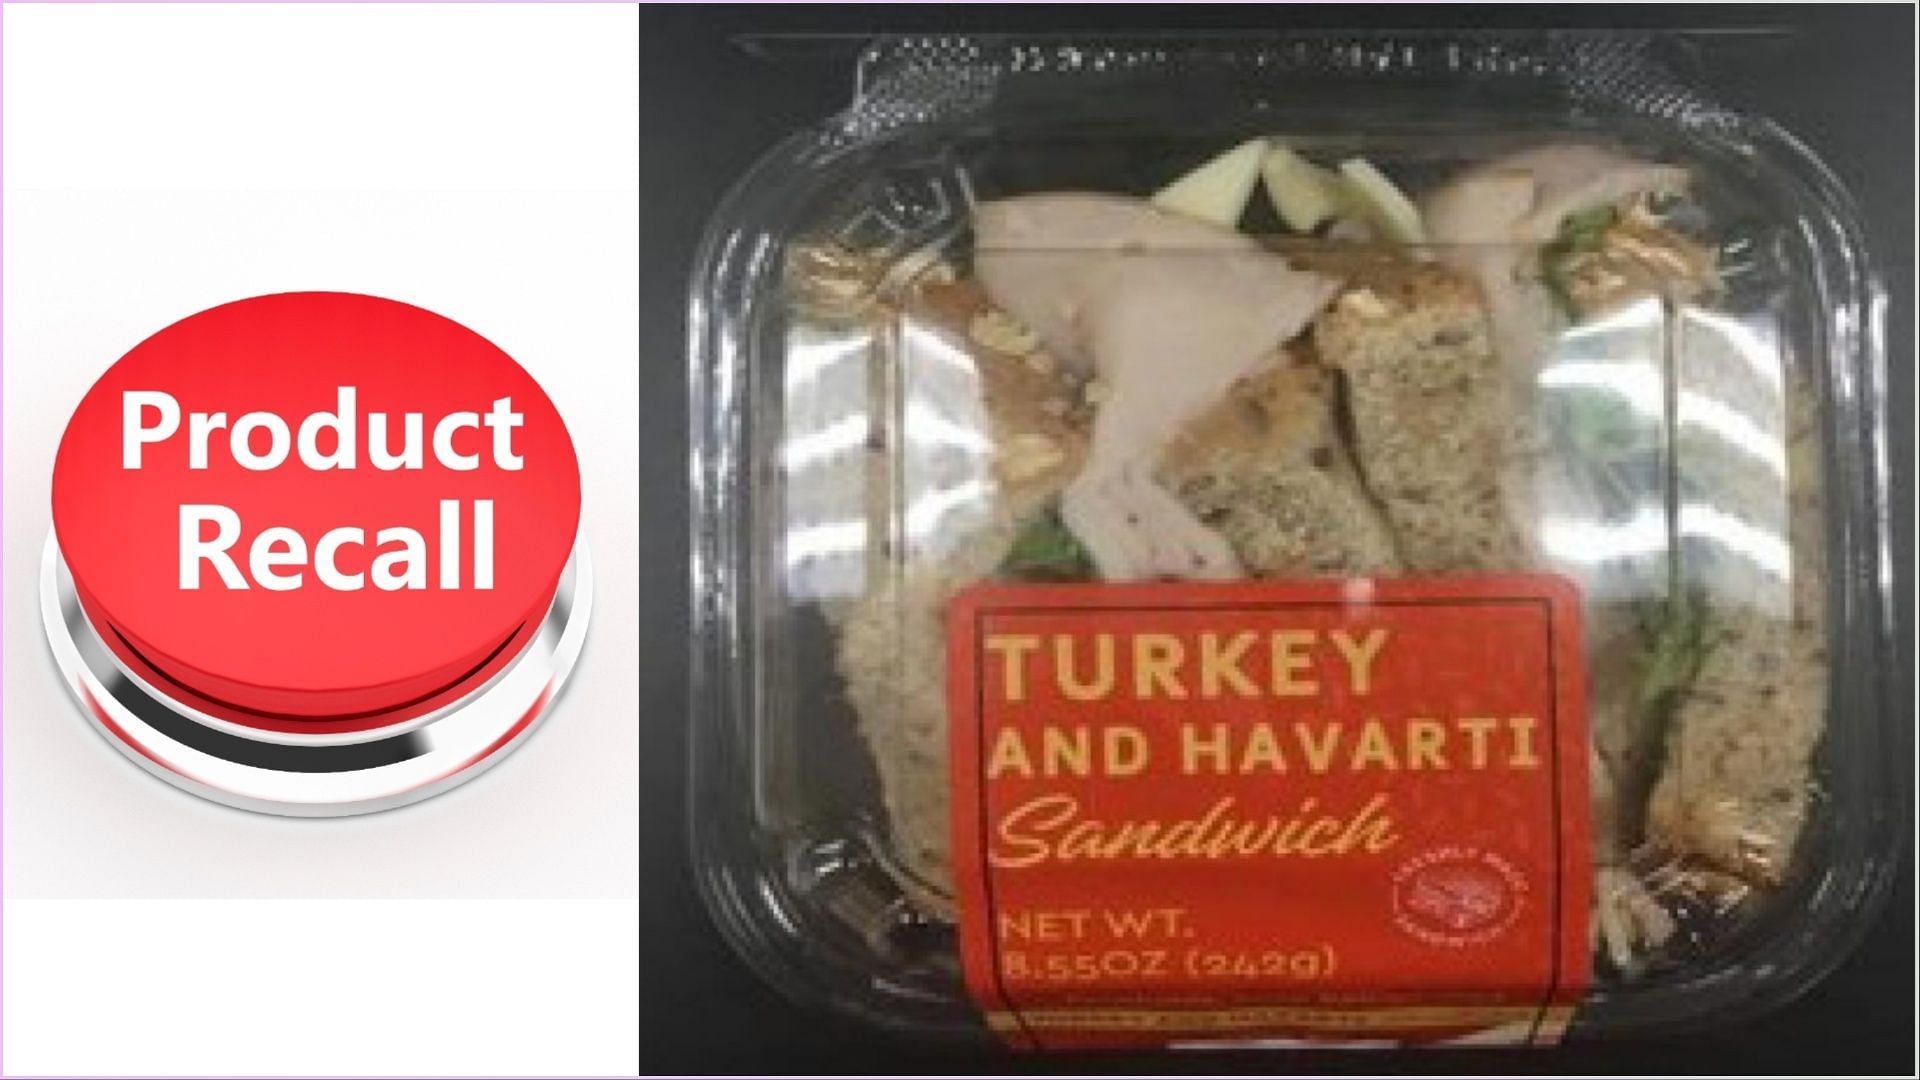 GH Foods CA, LLC. recalls Turkey and Havarti Sandwiches over undeclared seasame allergens concerns (Image via FDA)